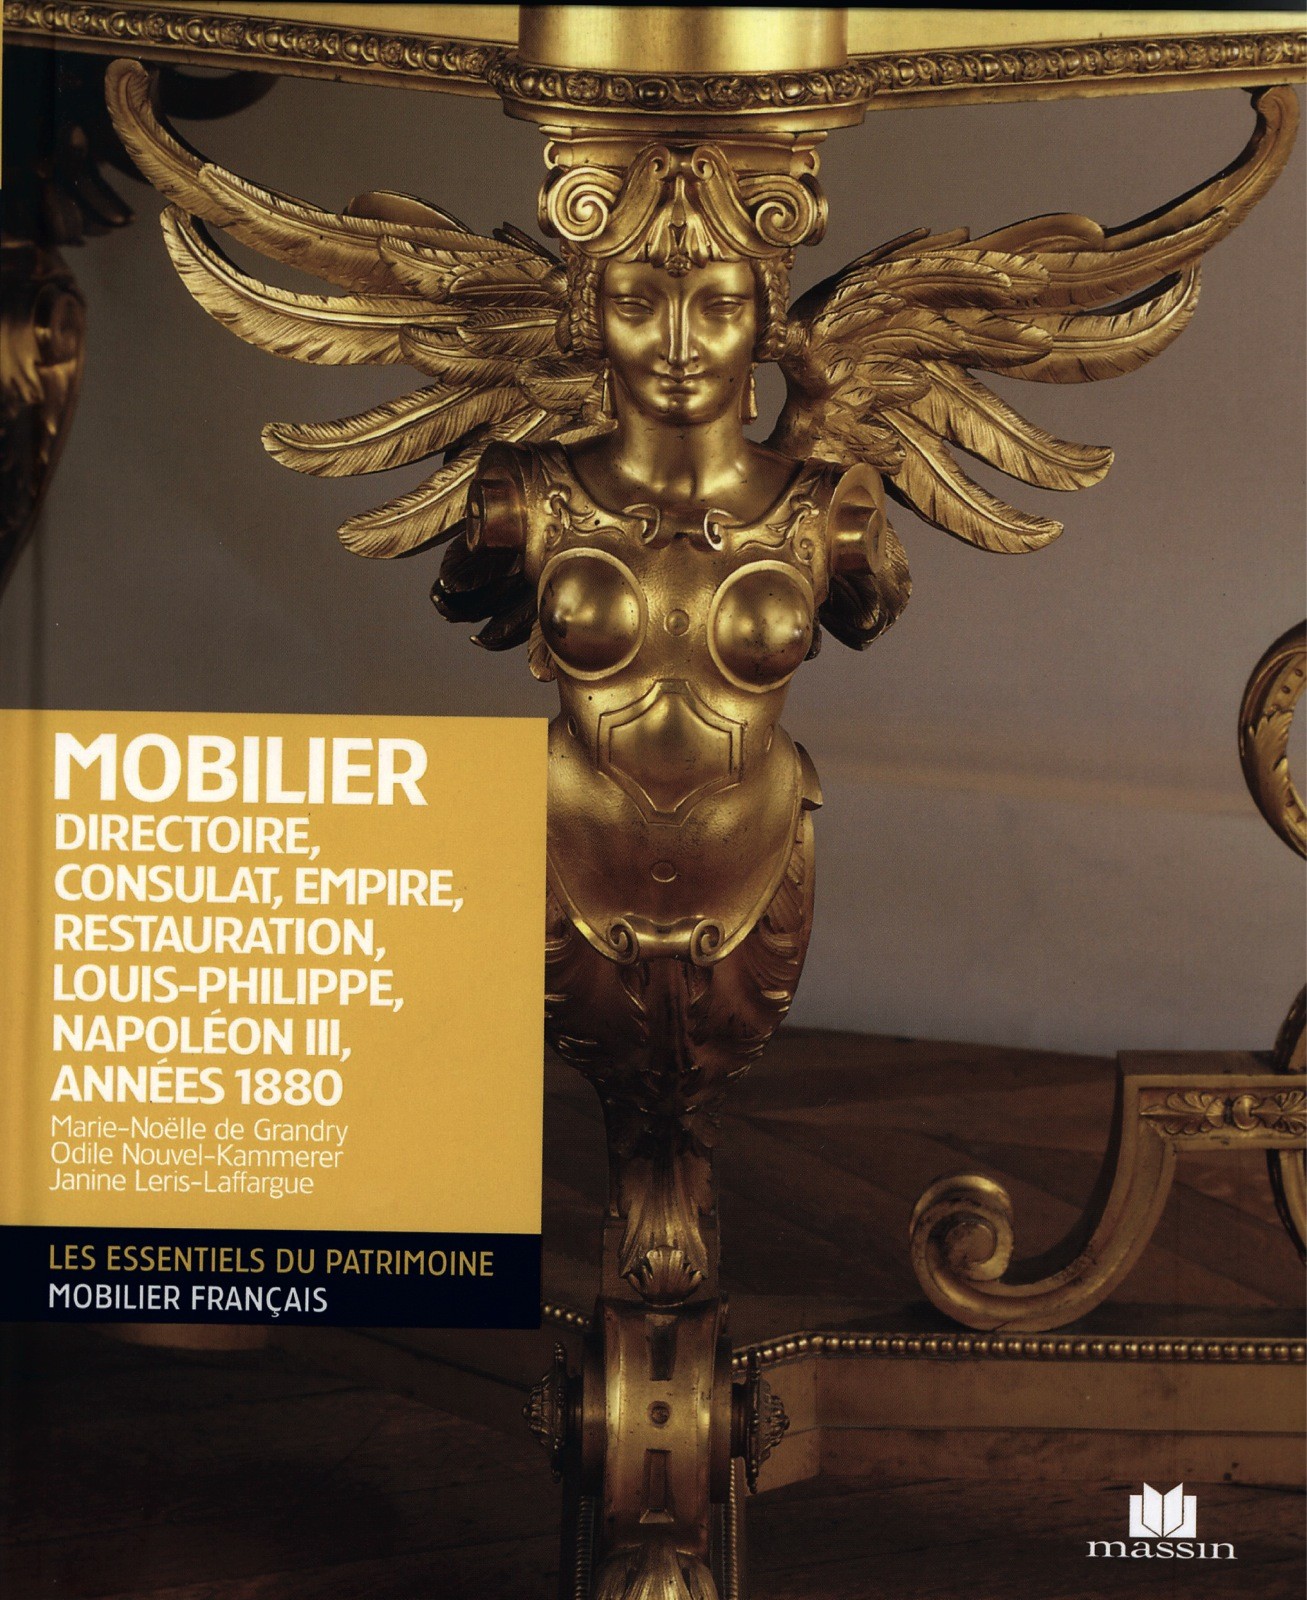 Mobilier Directoire, Consulat, Empire, Restauration, Louis-Philippe, Napoléon III, Années 1880